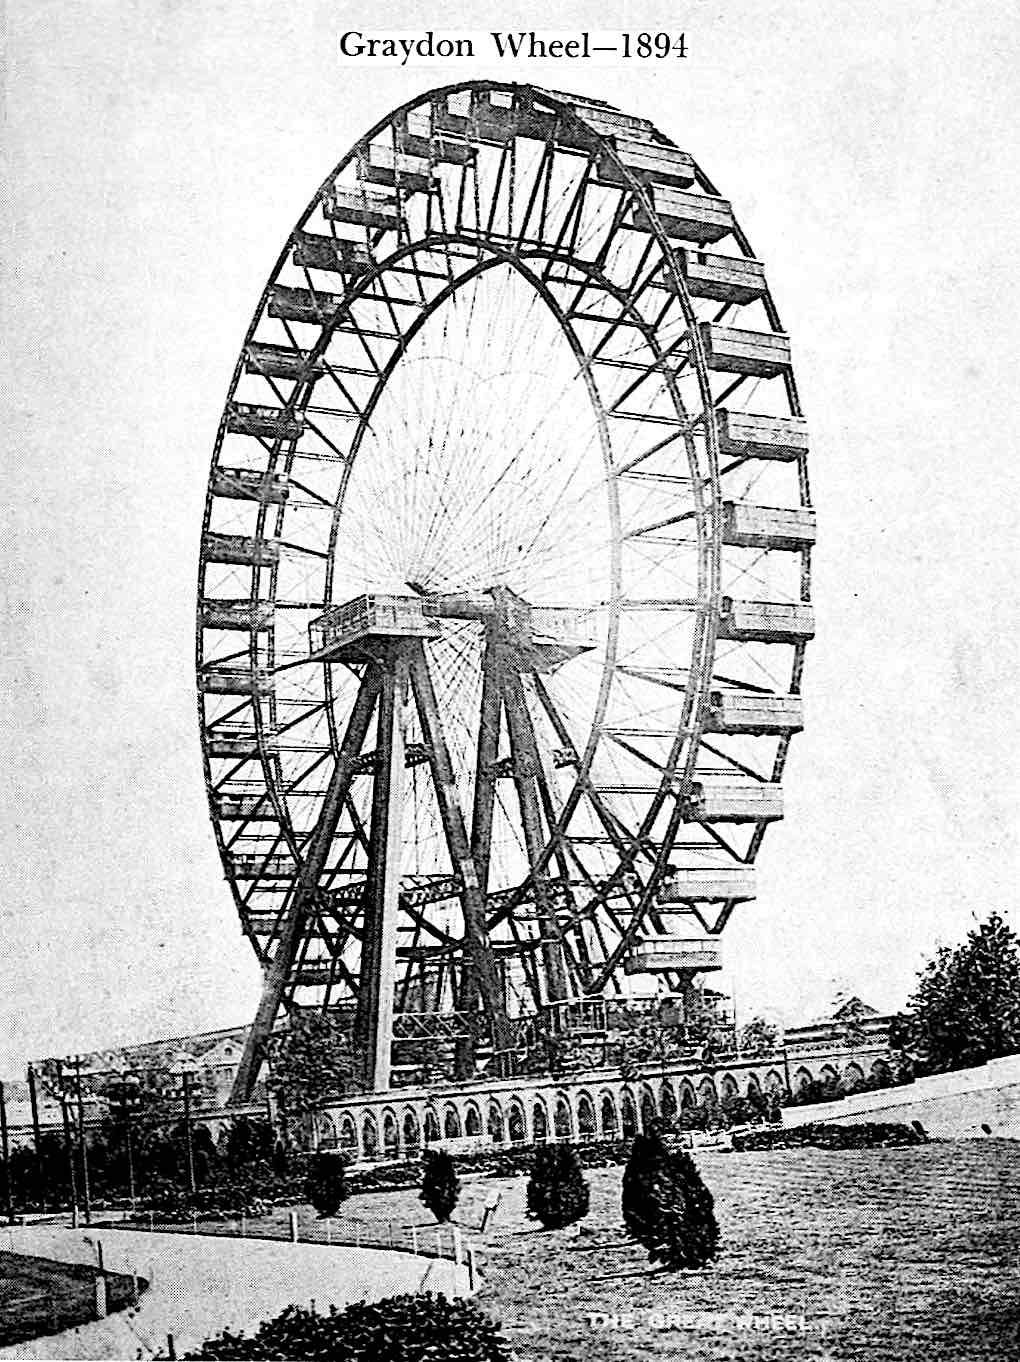 the Graydon Wheel 1894 amusement, a giant ferris wheel